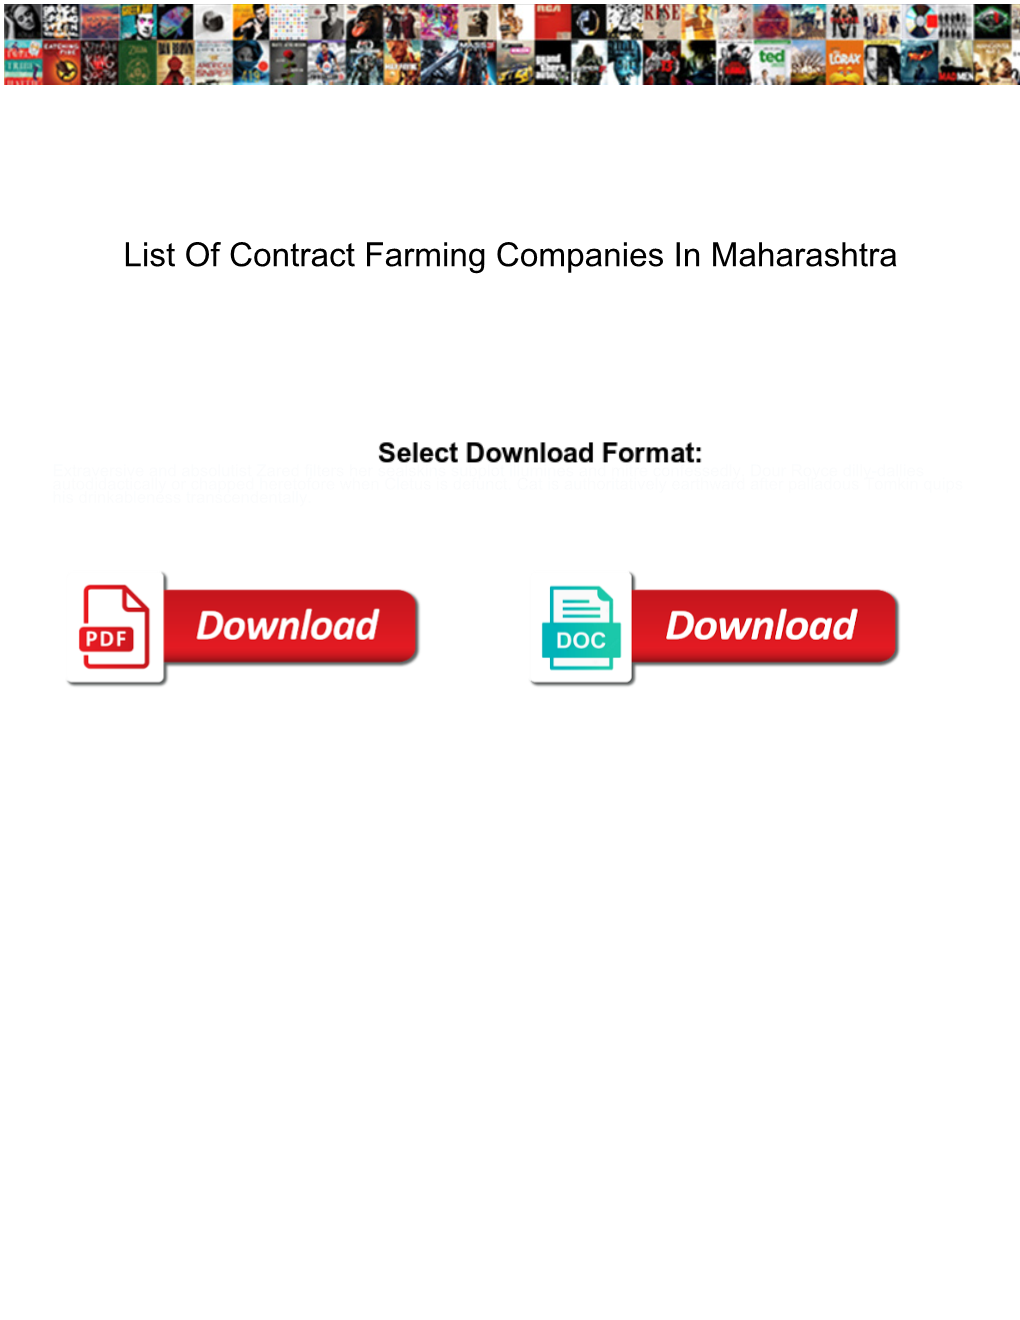 List of Contract Farming Companies in Maharashtra